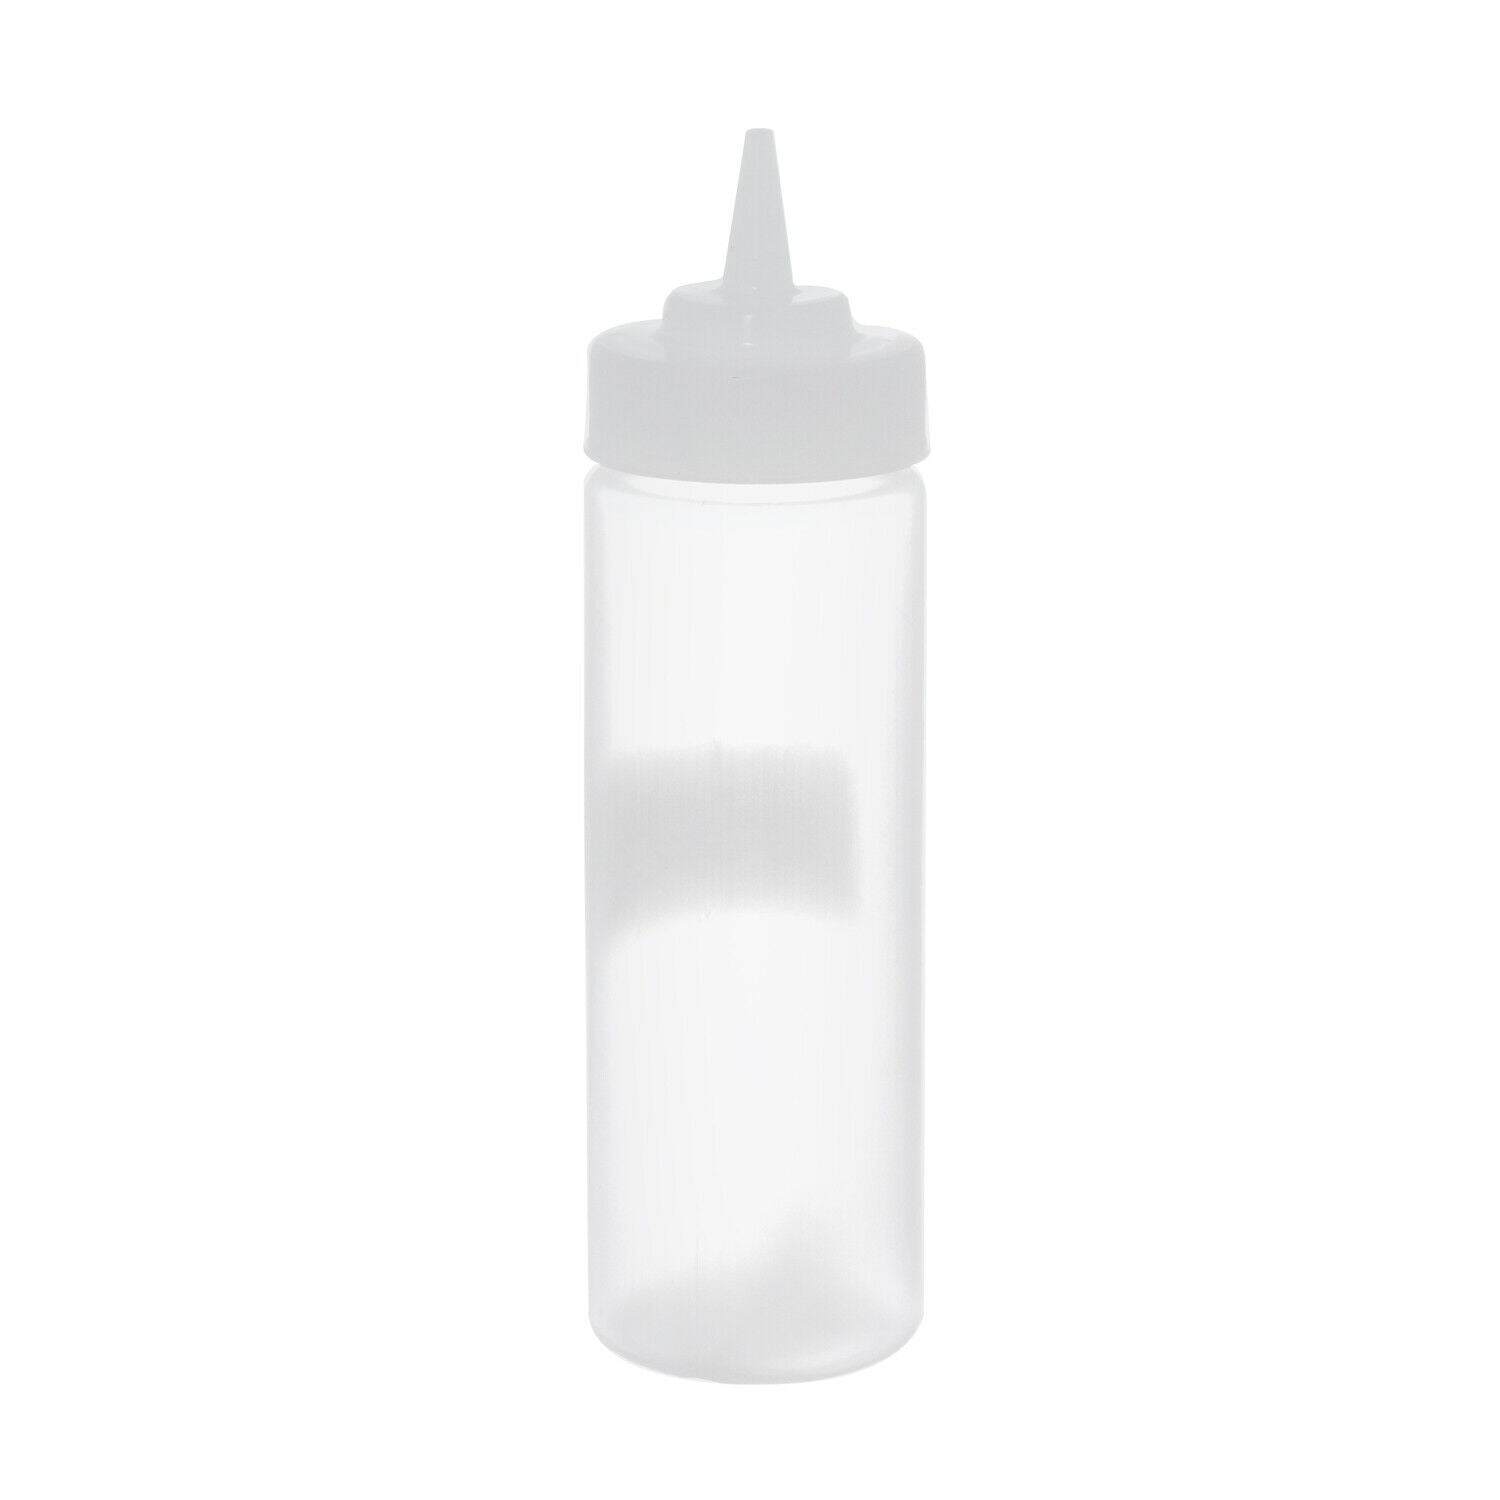 Dosatore biberon per condimenti trasparente 15 cm 290ml 04 19 75